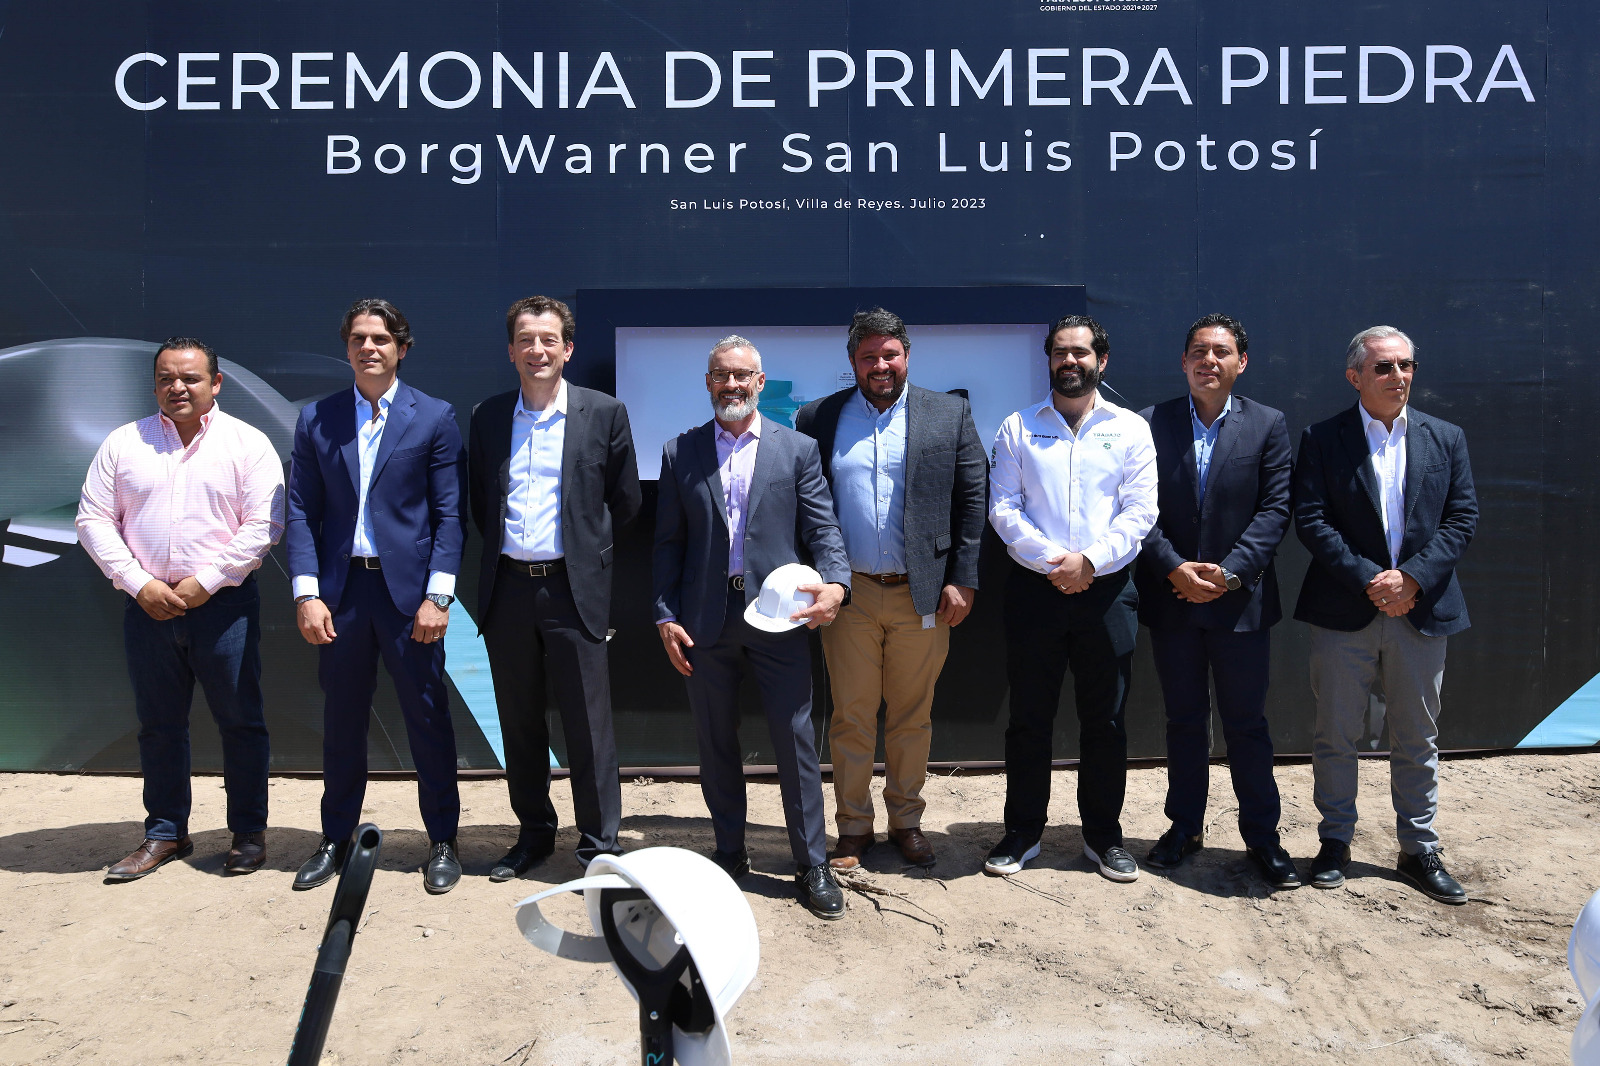 BorgWarner to build new plant in San Luis Potosí